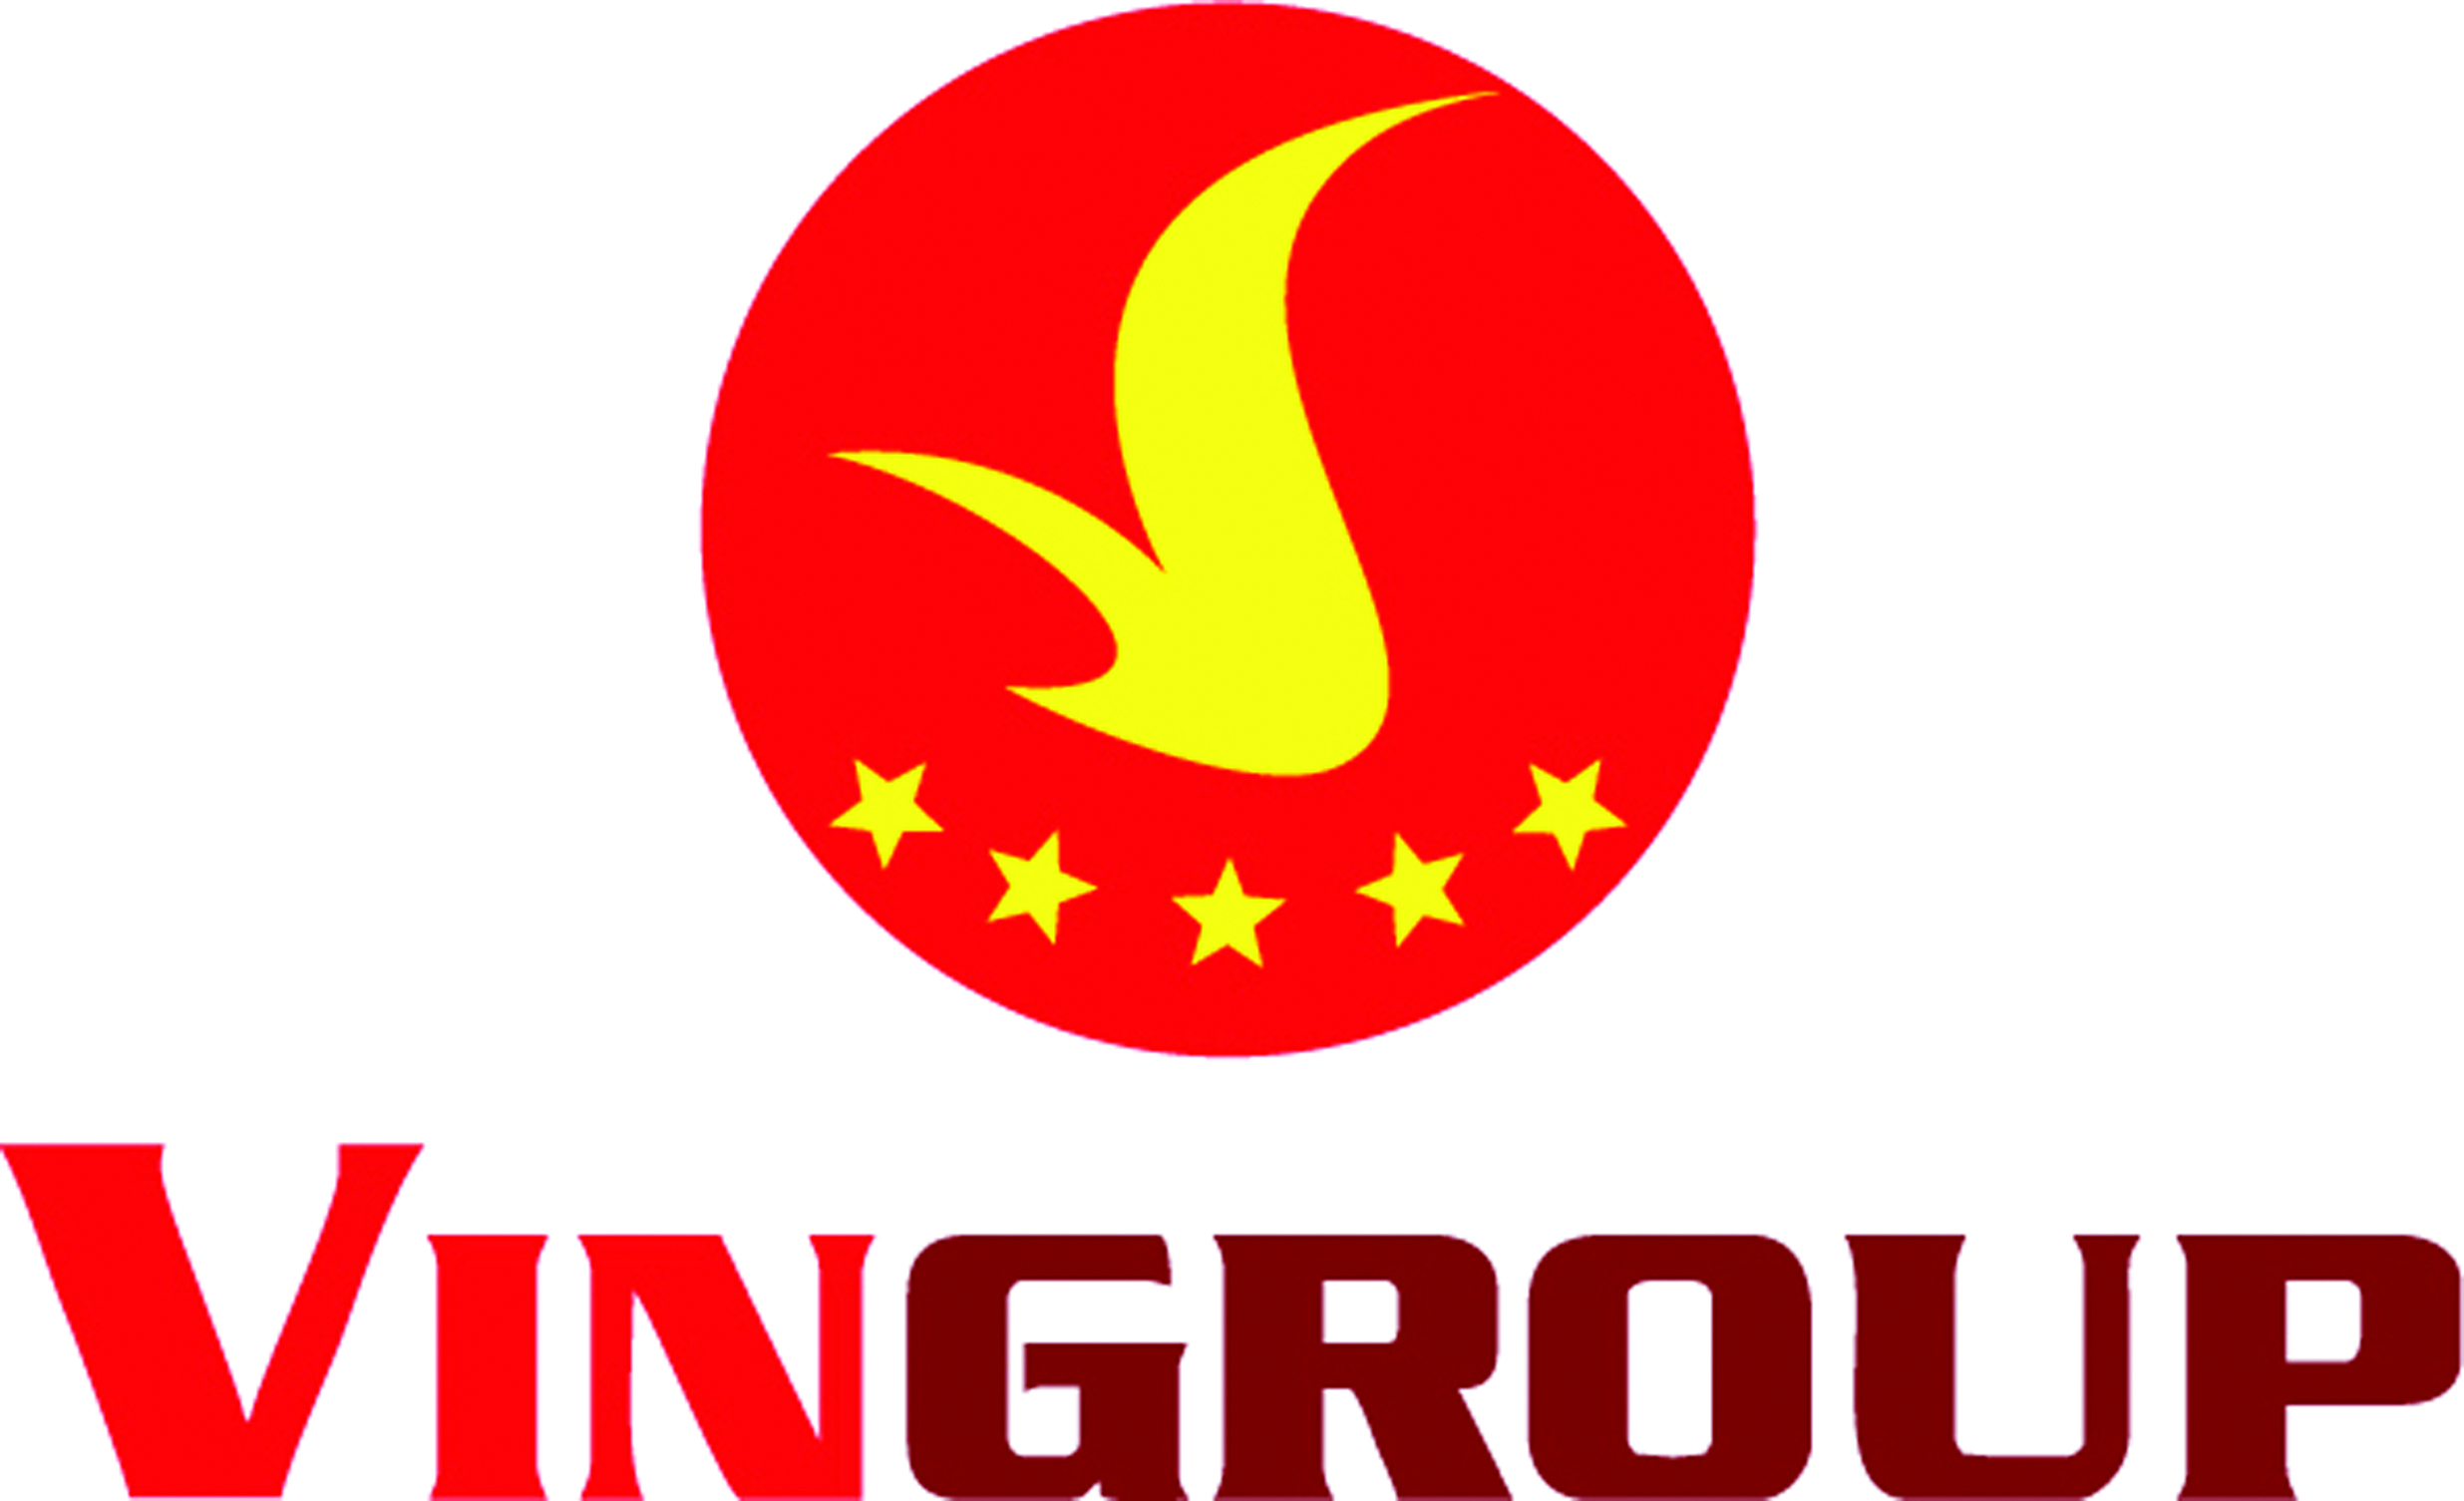 Logo name